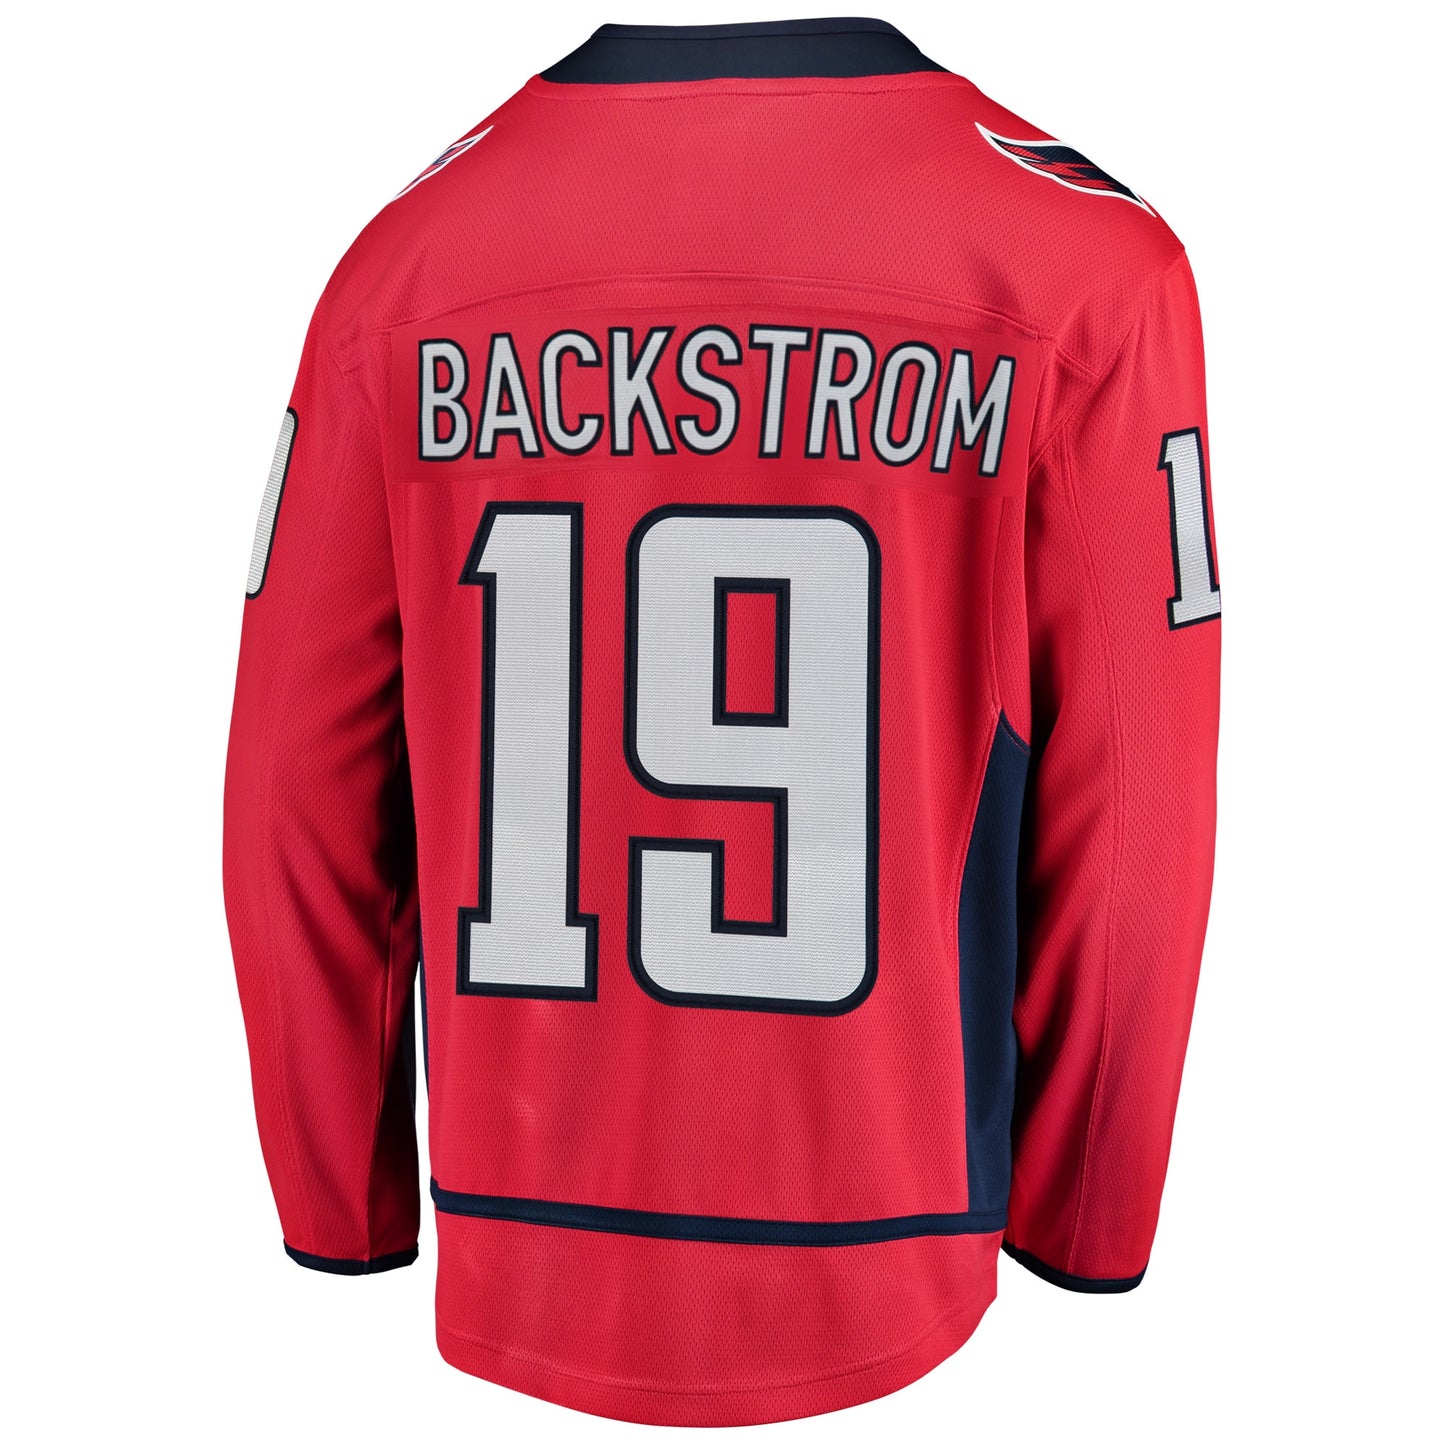 Nicklas Backstrom Washington Capitals Fanatics Branded Breakaway Player Jersey - Red